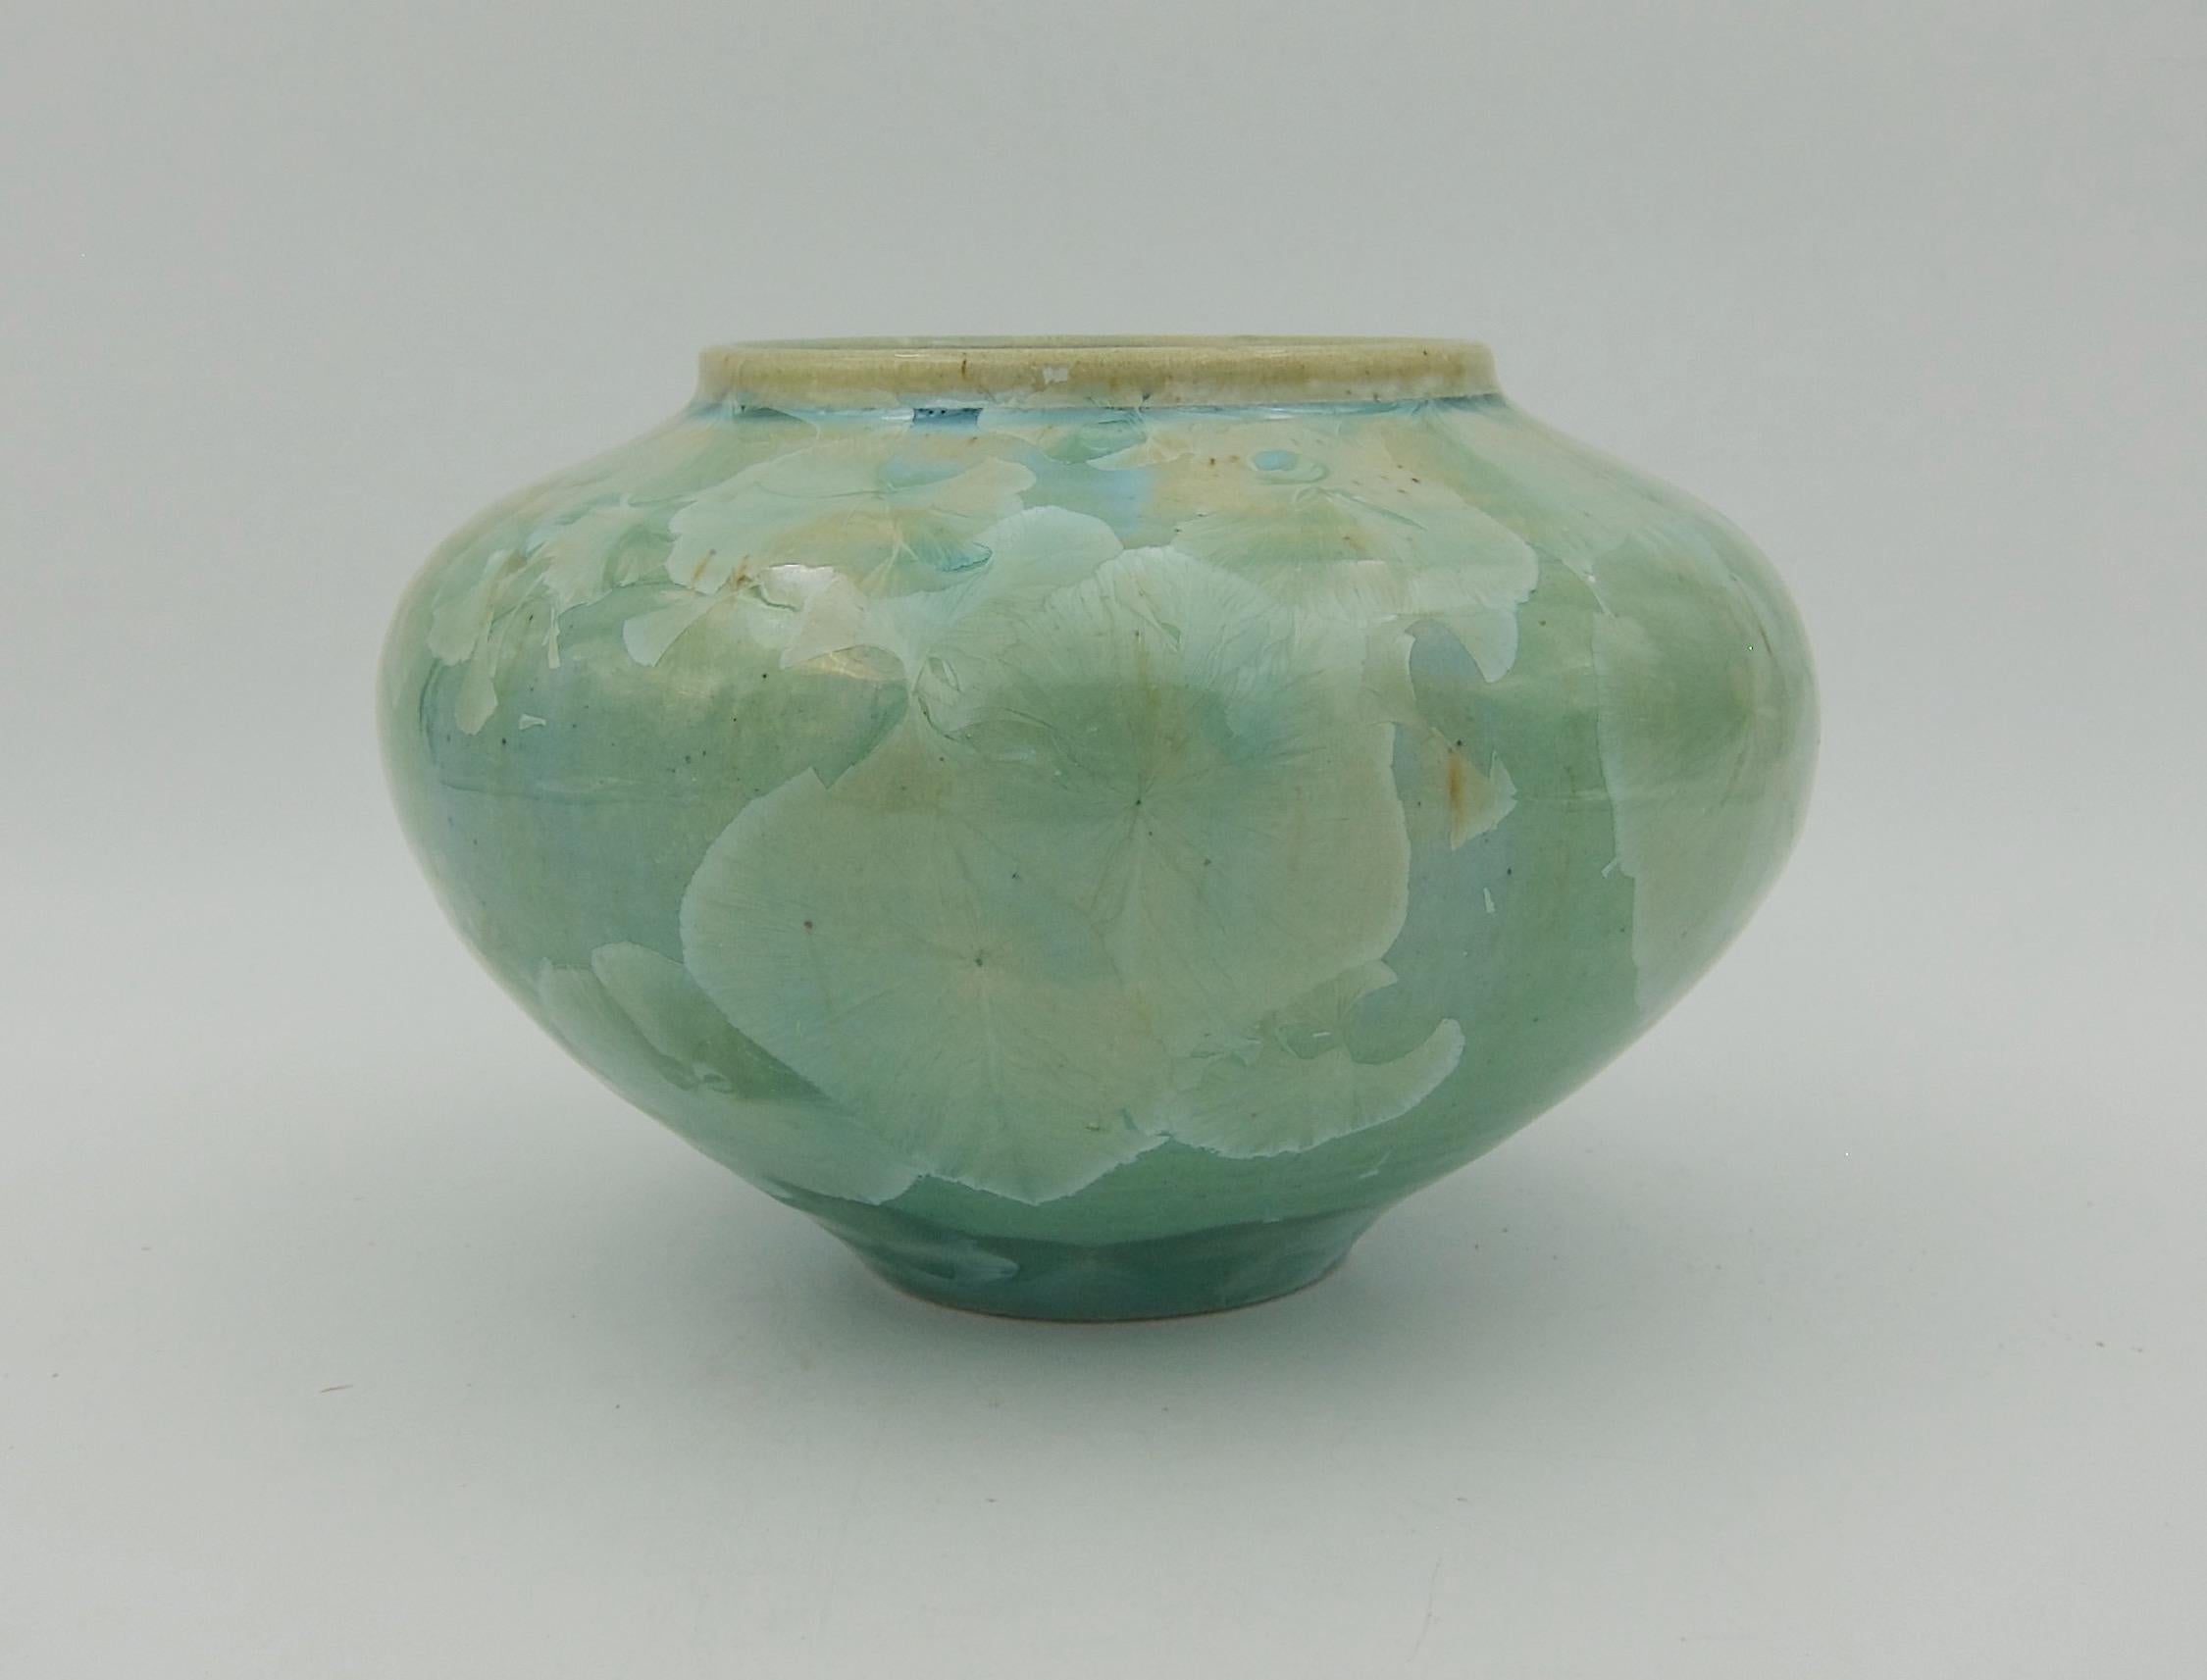 Modern Vintage Buckingham Art Pottery Vase with Green Crystalline Glaze, 1994